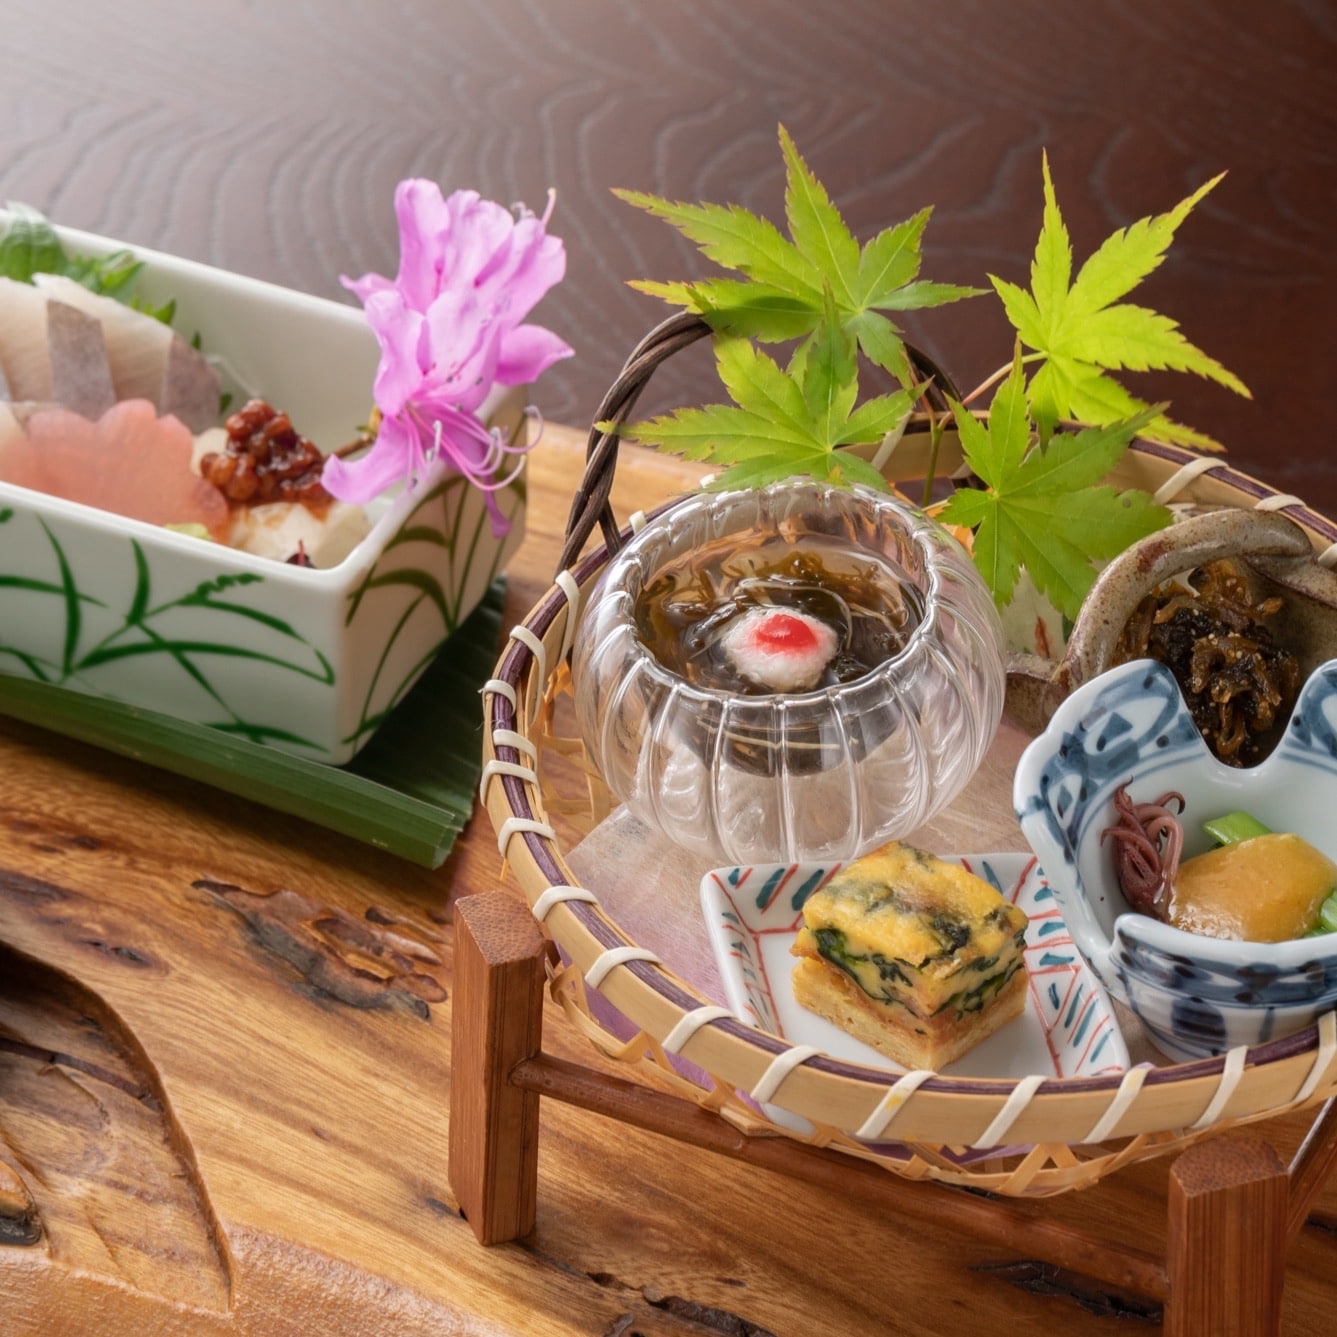 Silakan nikmati cita rasa musiman "Masakan Kreatif Ichinokawa" dengan banyak tanaman liar musiman.